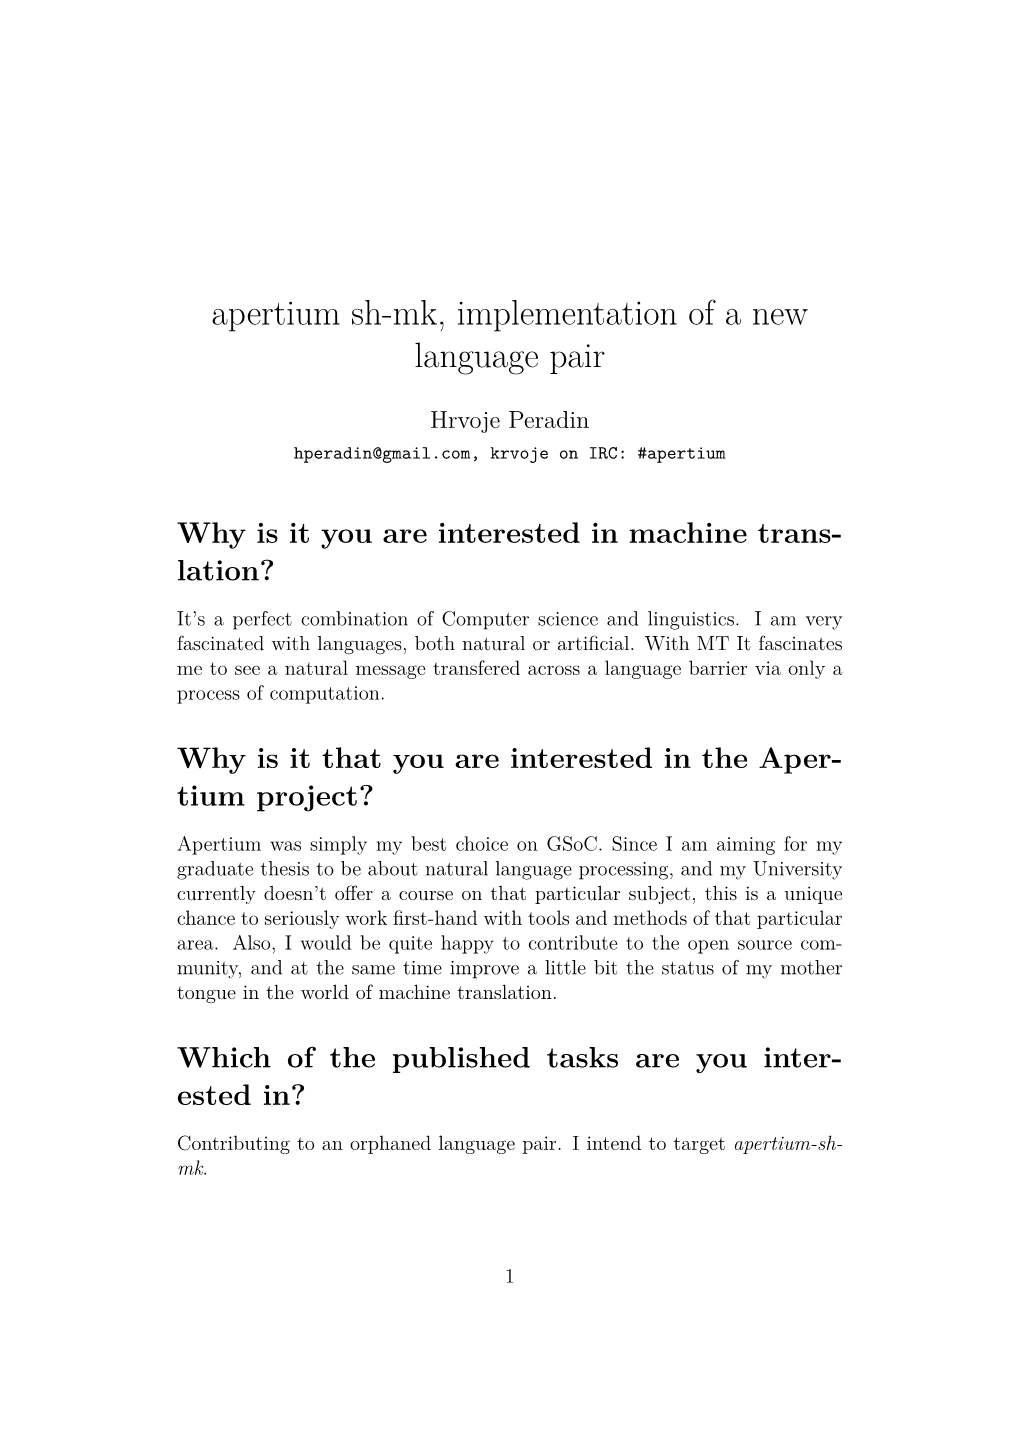 Apertium Sh-Mk, Implementation of a New Language Pair